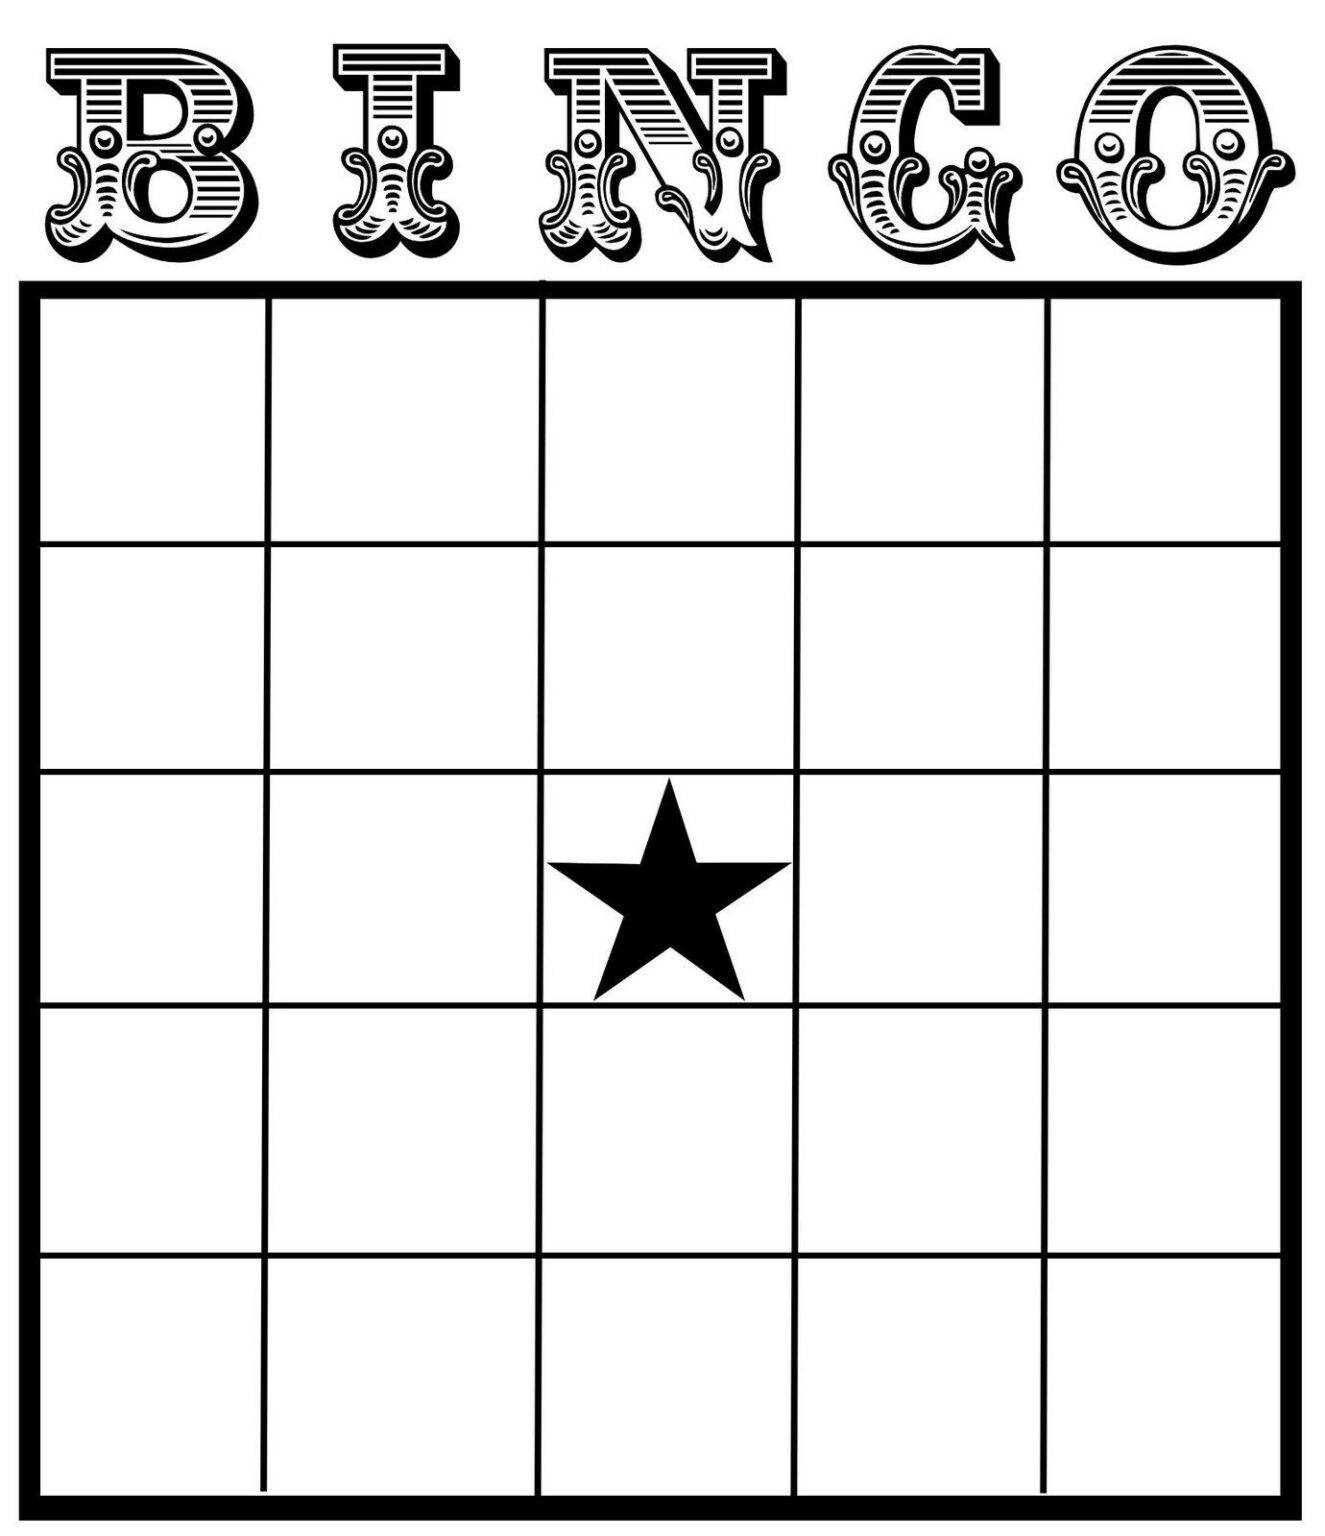 blank-bingo-card-template-microsoft-word-professional-template-examples